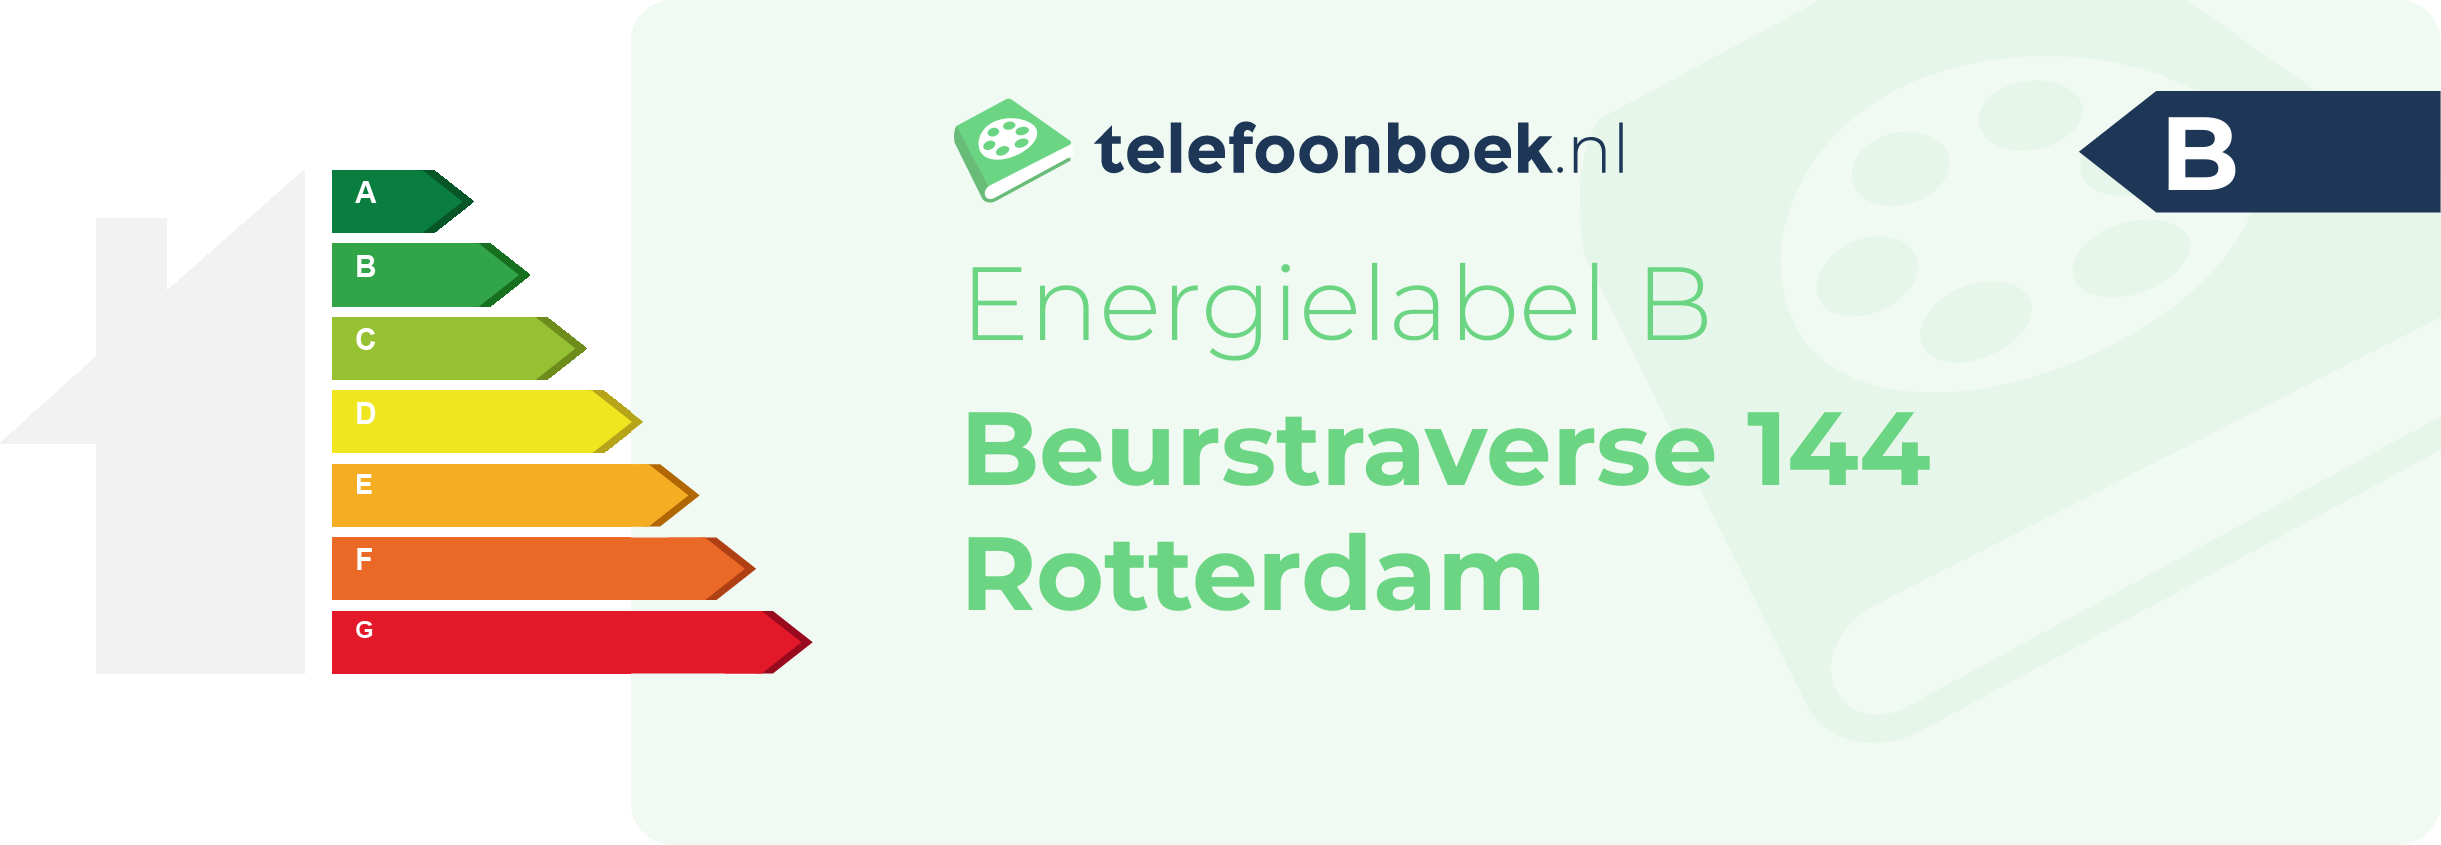 Energielabel Beurstraverse 144 Rotterdam